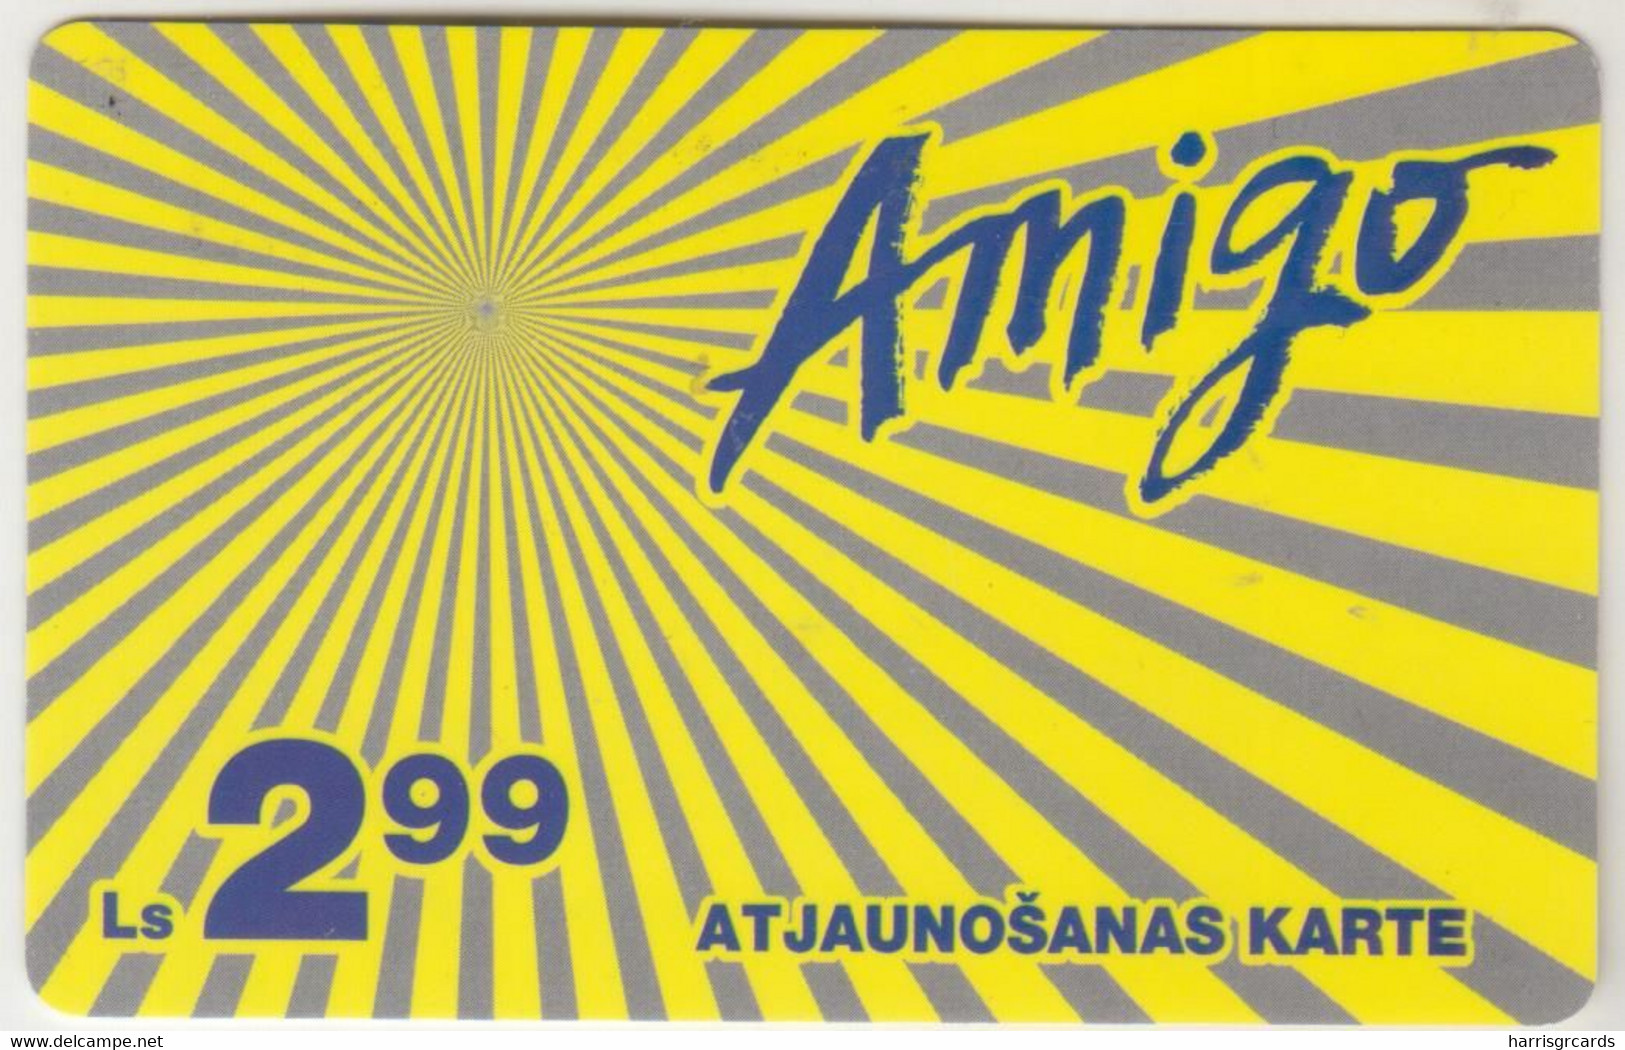 LATVIA - Amigo 3, Amigo Refill Card , 2.99 Ls, Used - Letonia